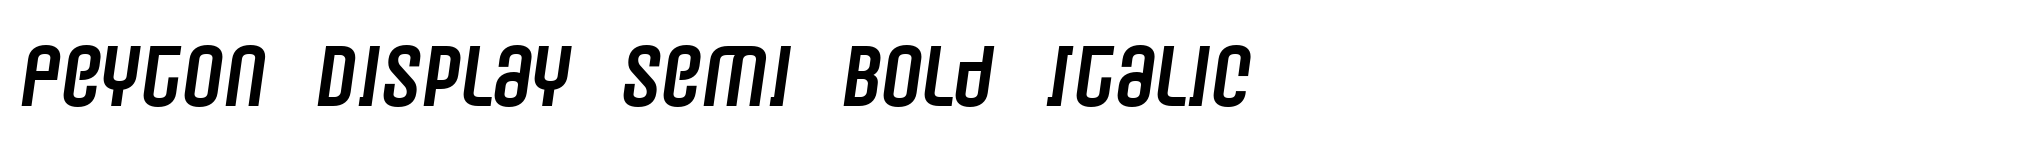 Peyton Display Semi Bold Italic image